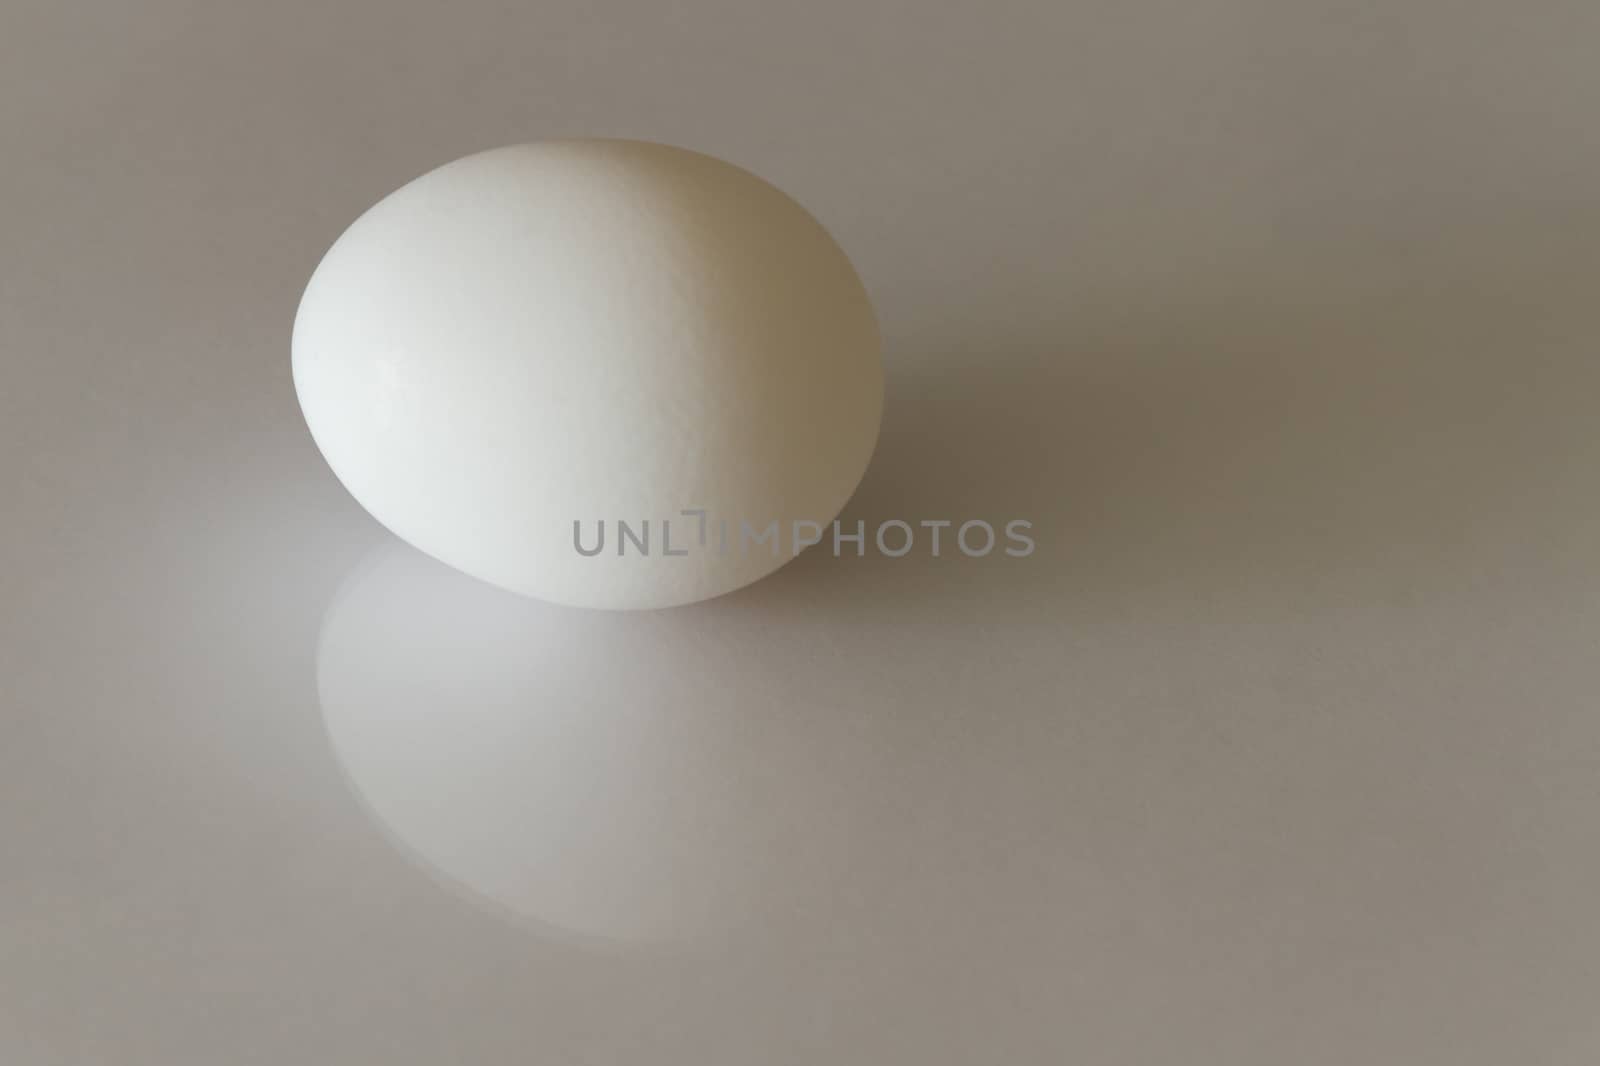 Egg on light background by lprising